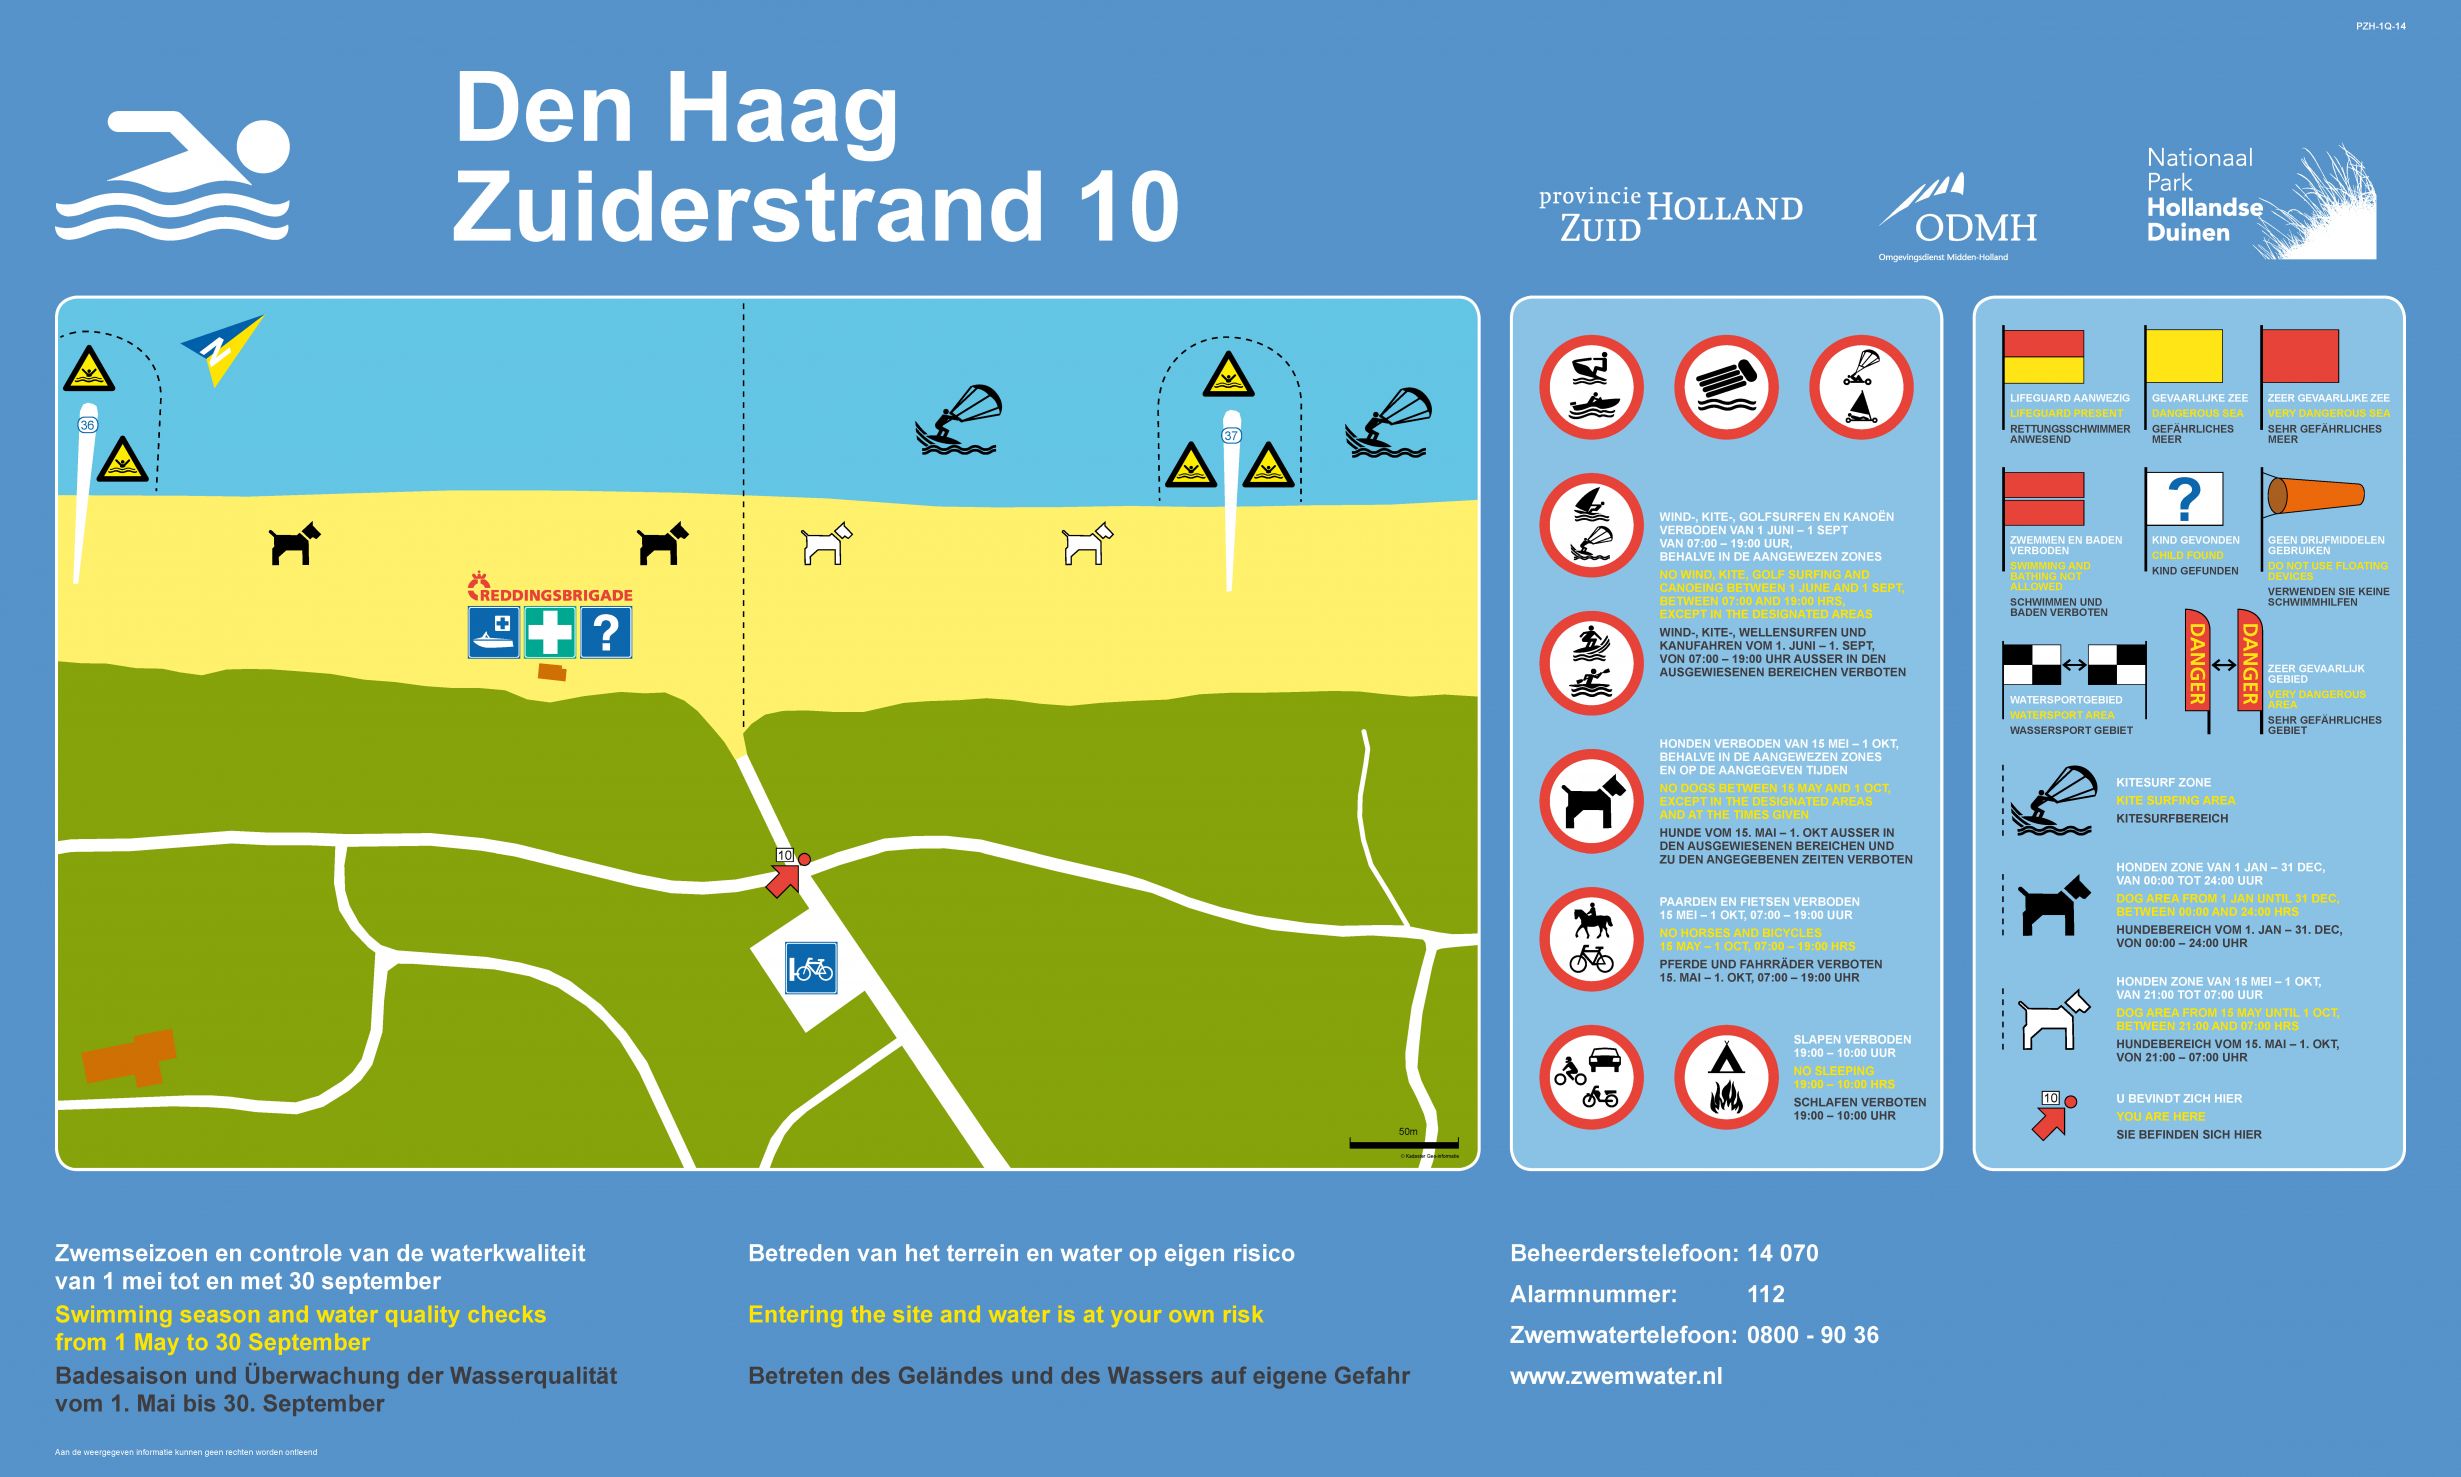 The information board at the swimming location Scheveningen Zuiderstrand